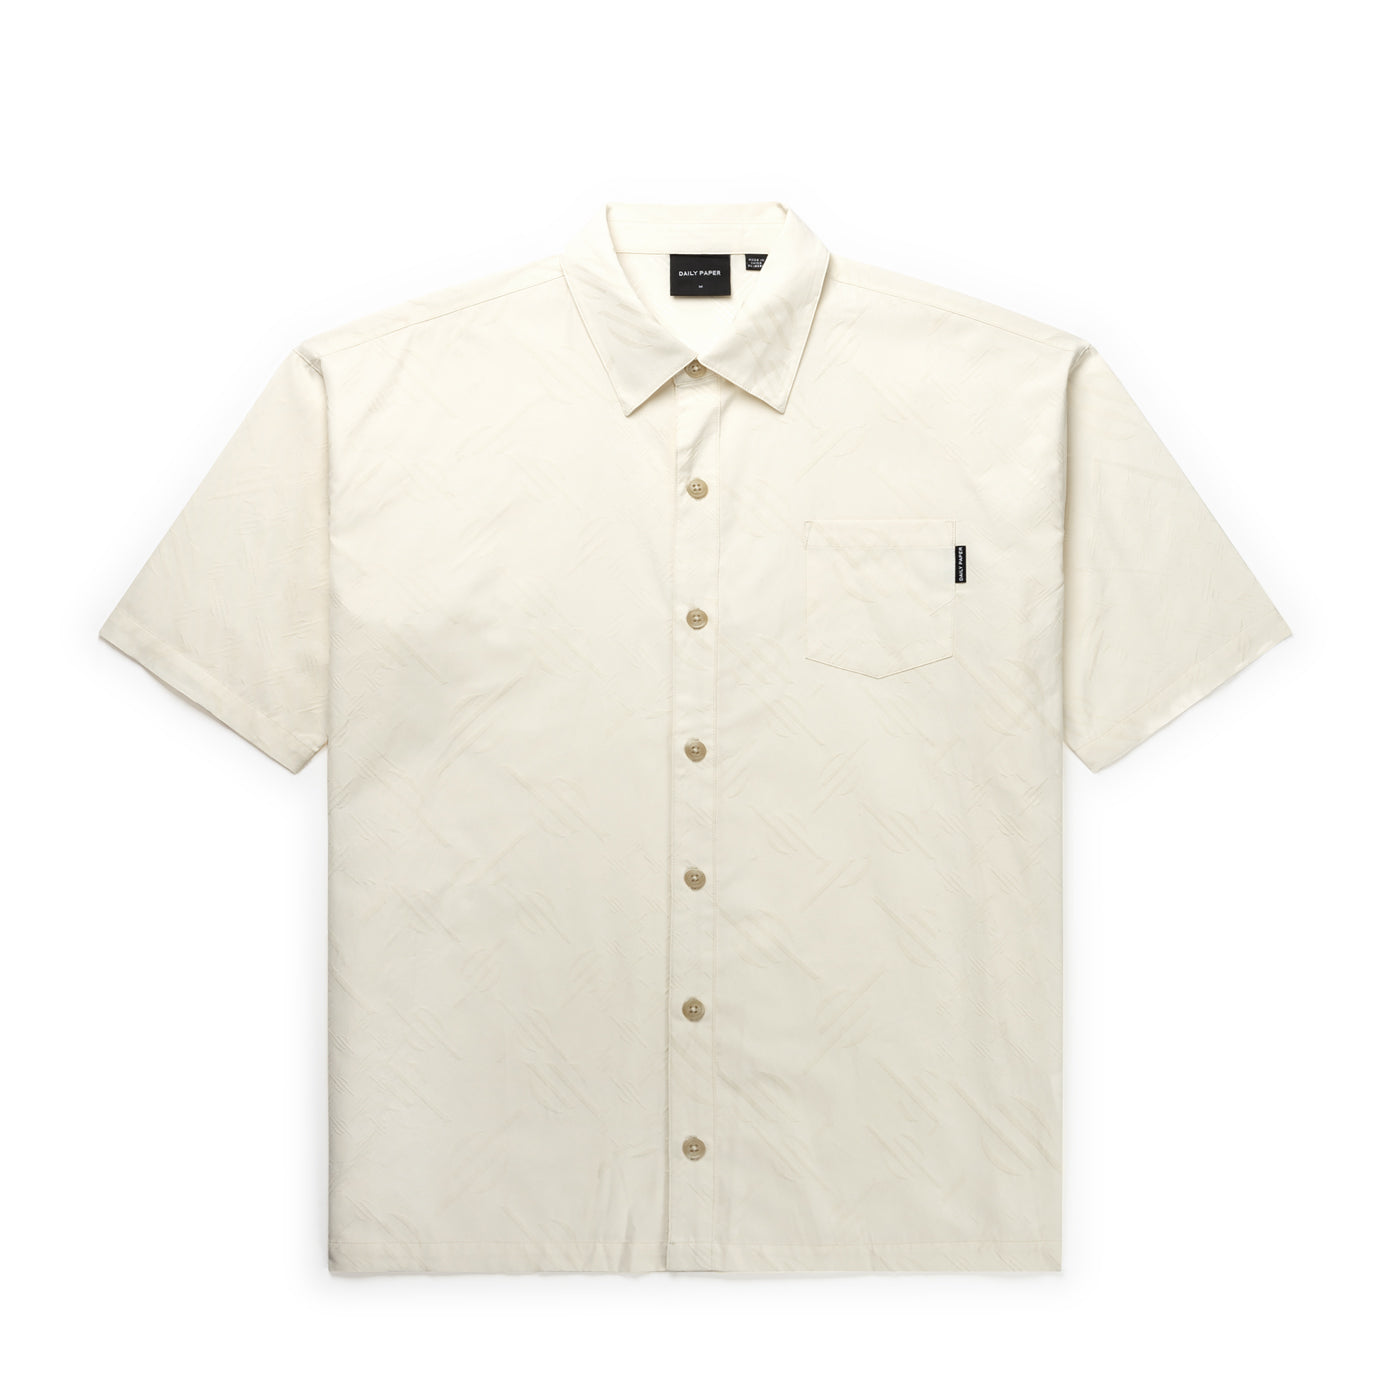 Piam Short Sleeve Shirt - Egret White